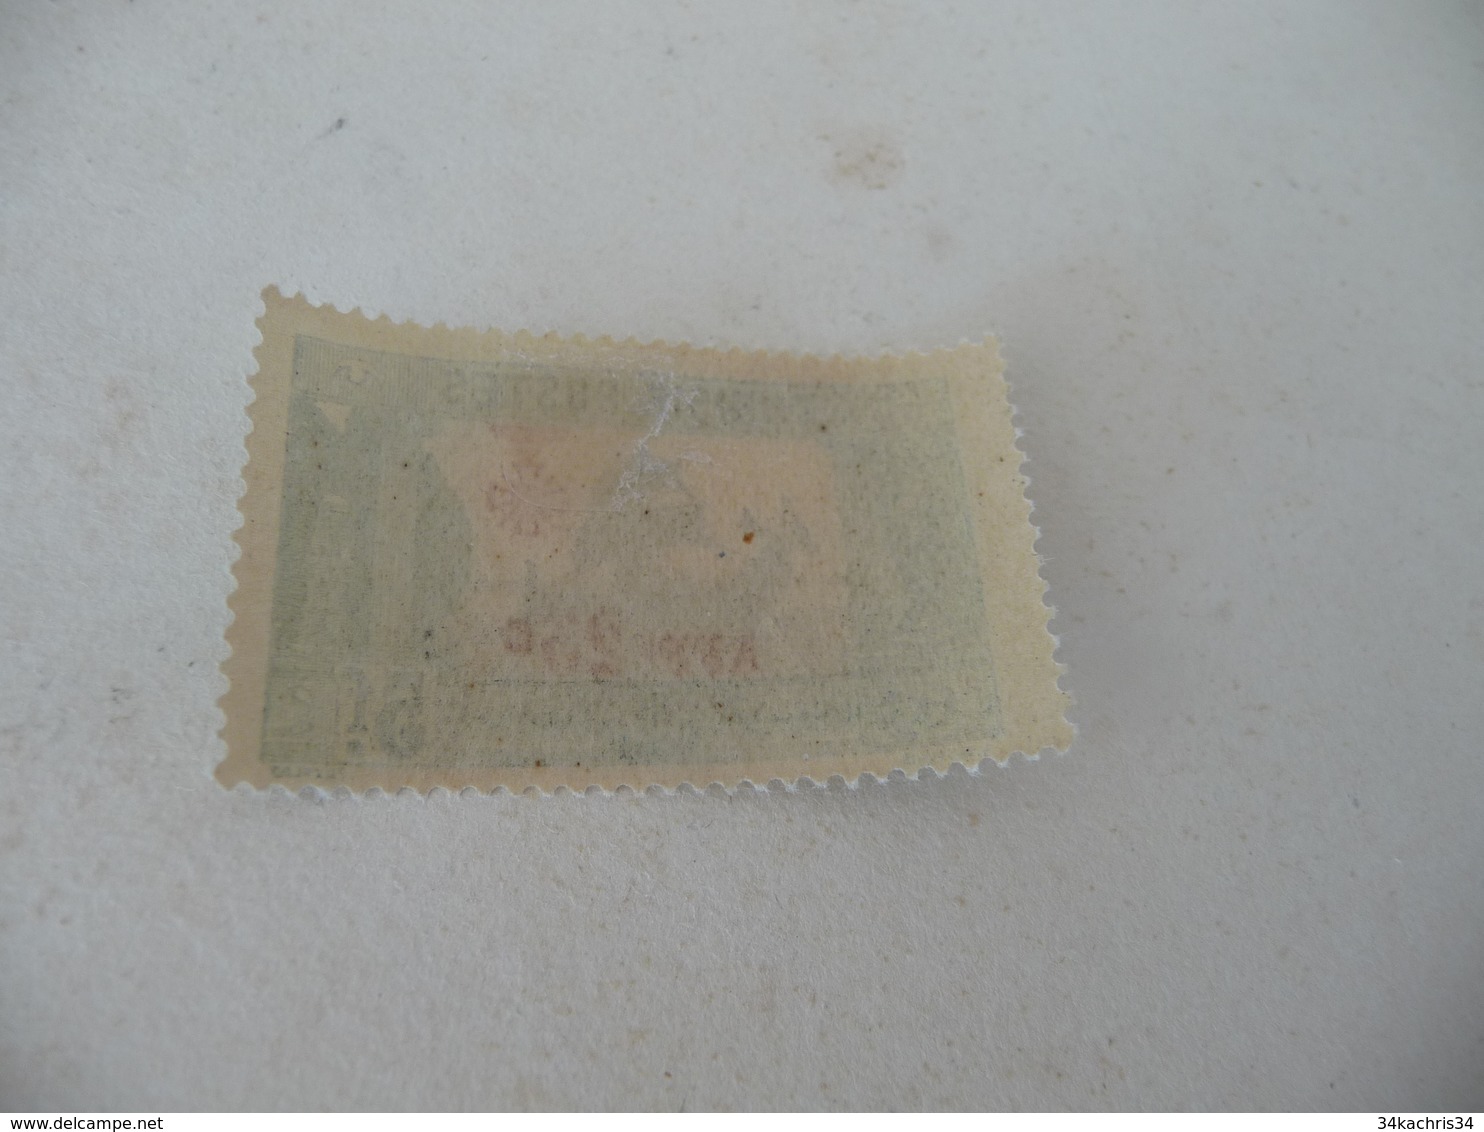 TP France Colonie Française Tunisie N° 95 Charnière - Unused Stamps